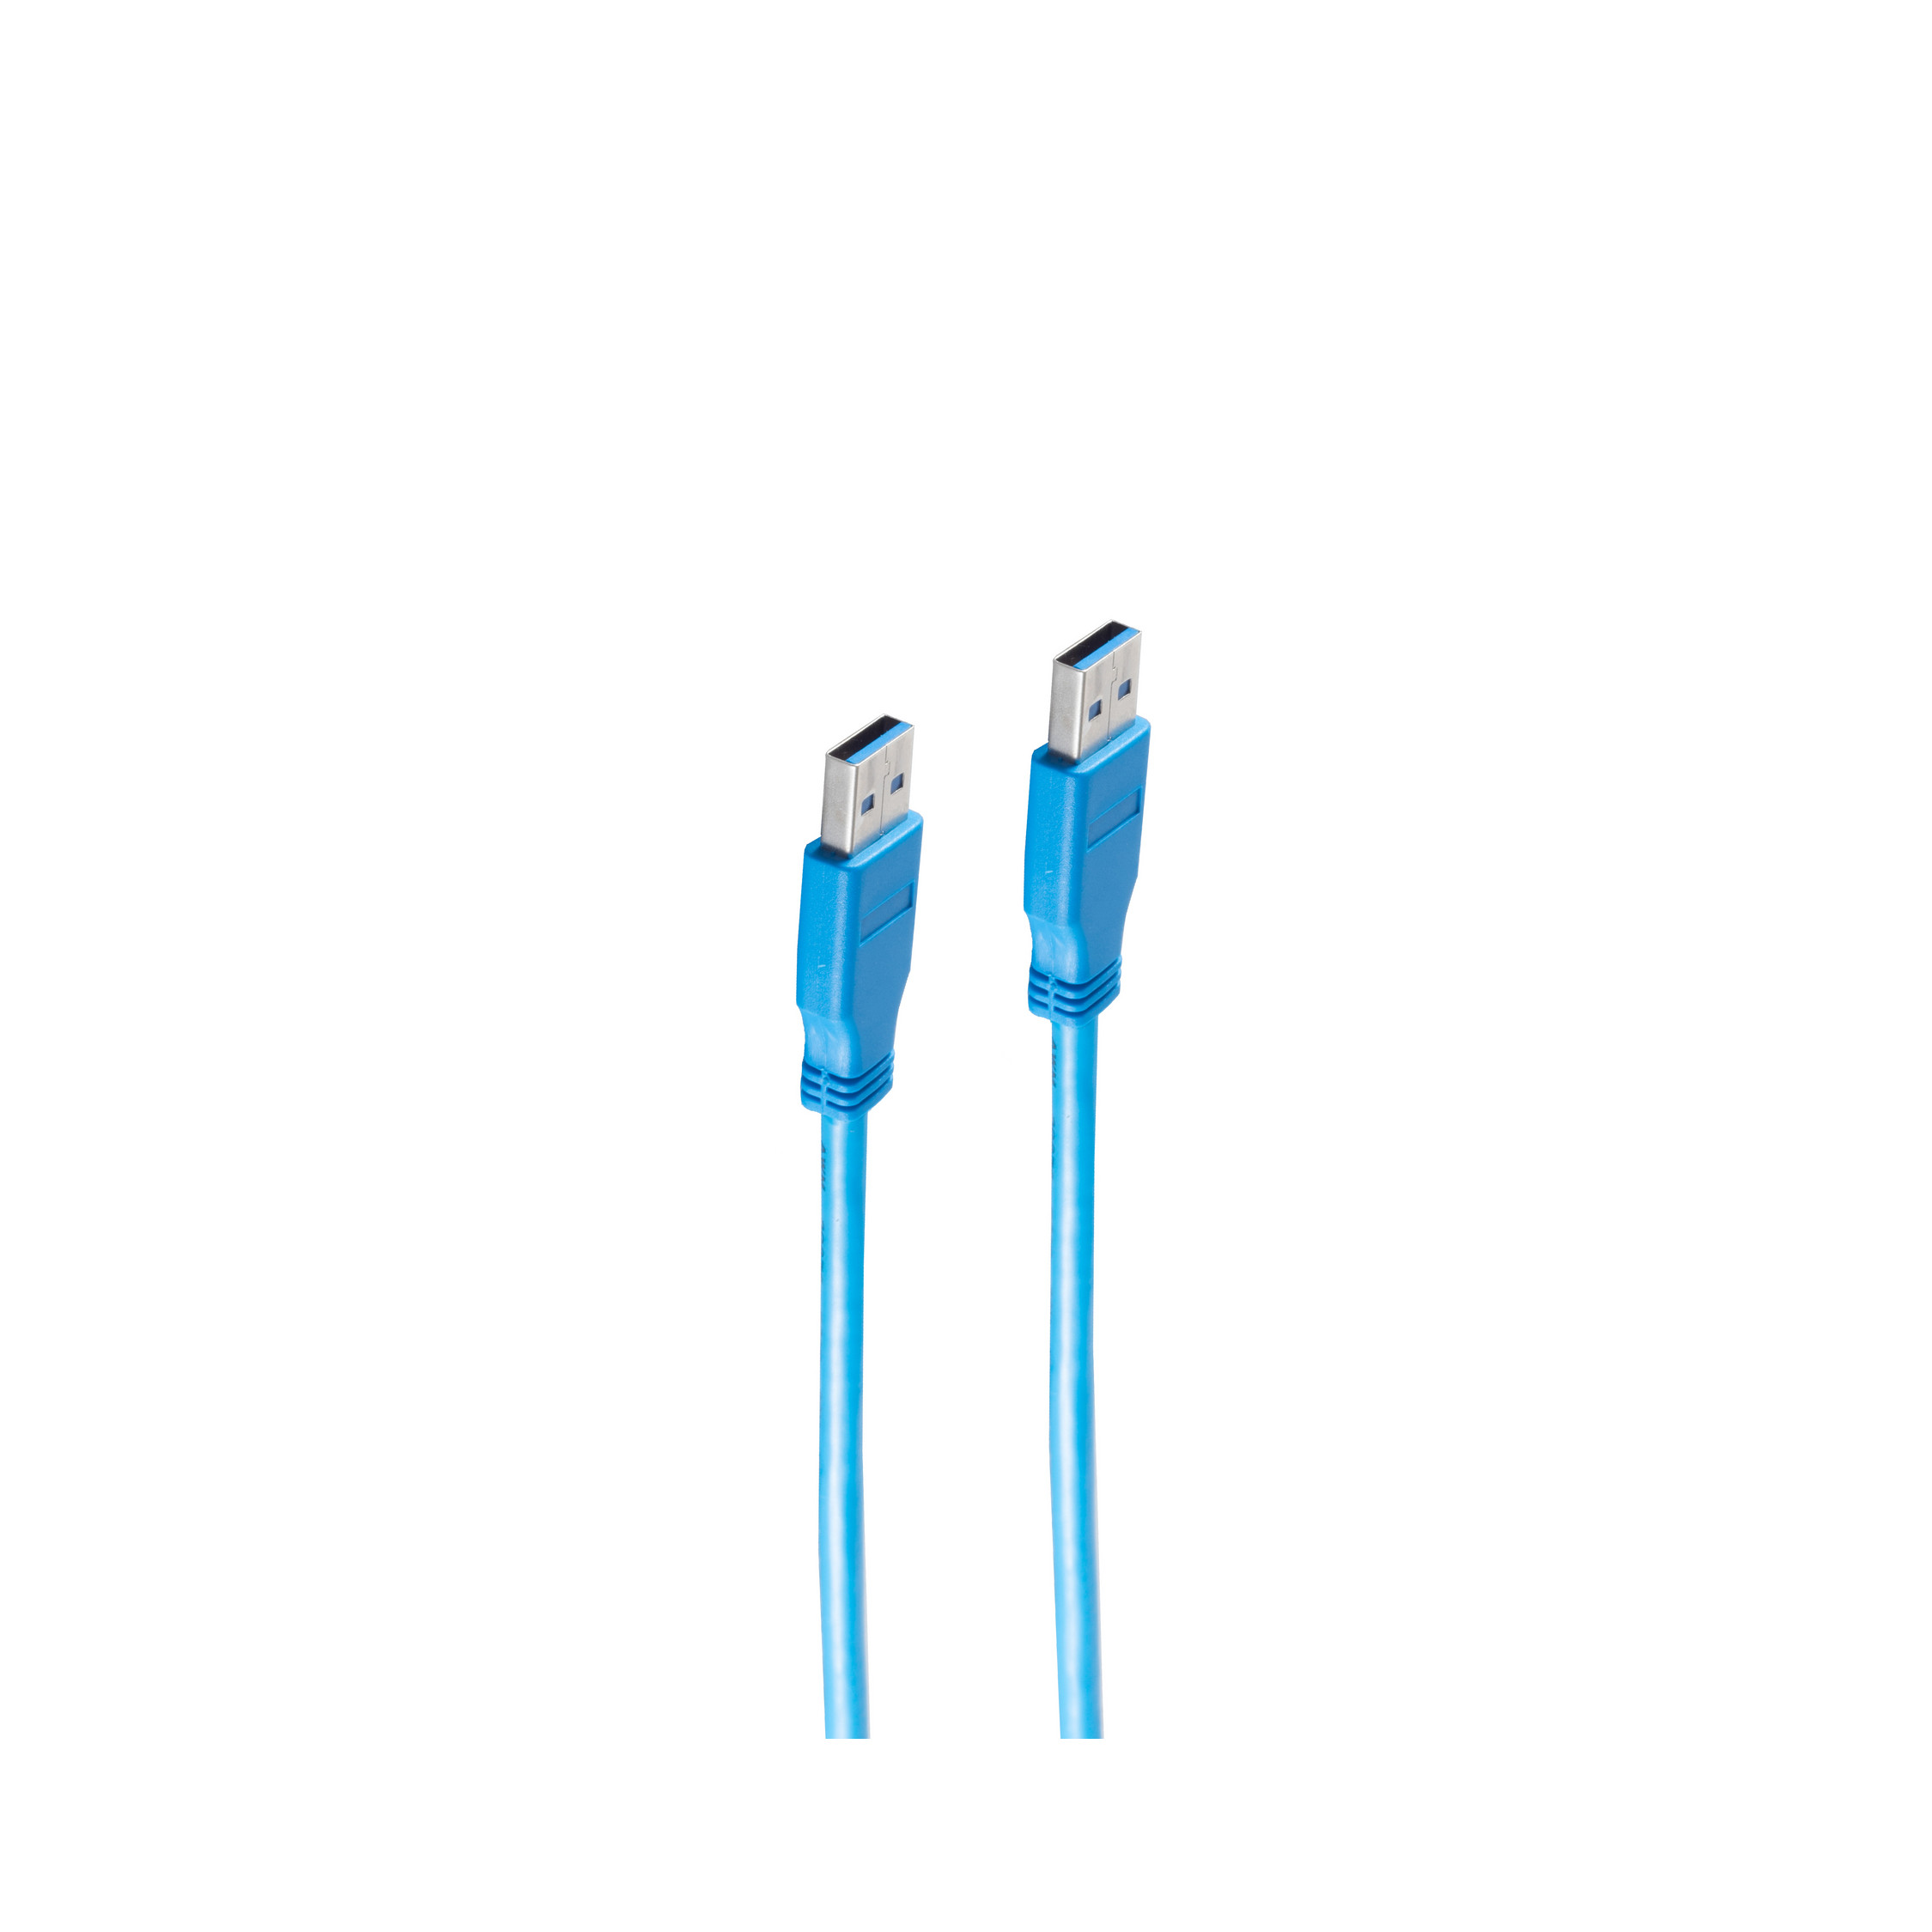 3.0 A USB / A Kabel Stecker Stecker USB Kabel blau SHIVERPEAKS 0,5m USB